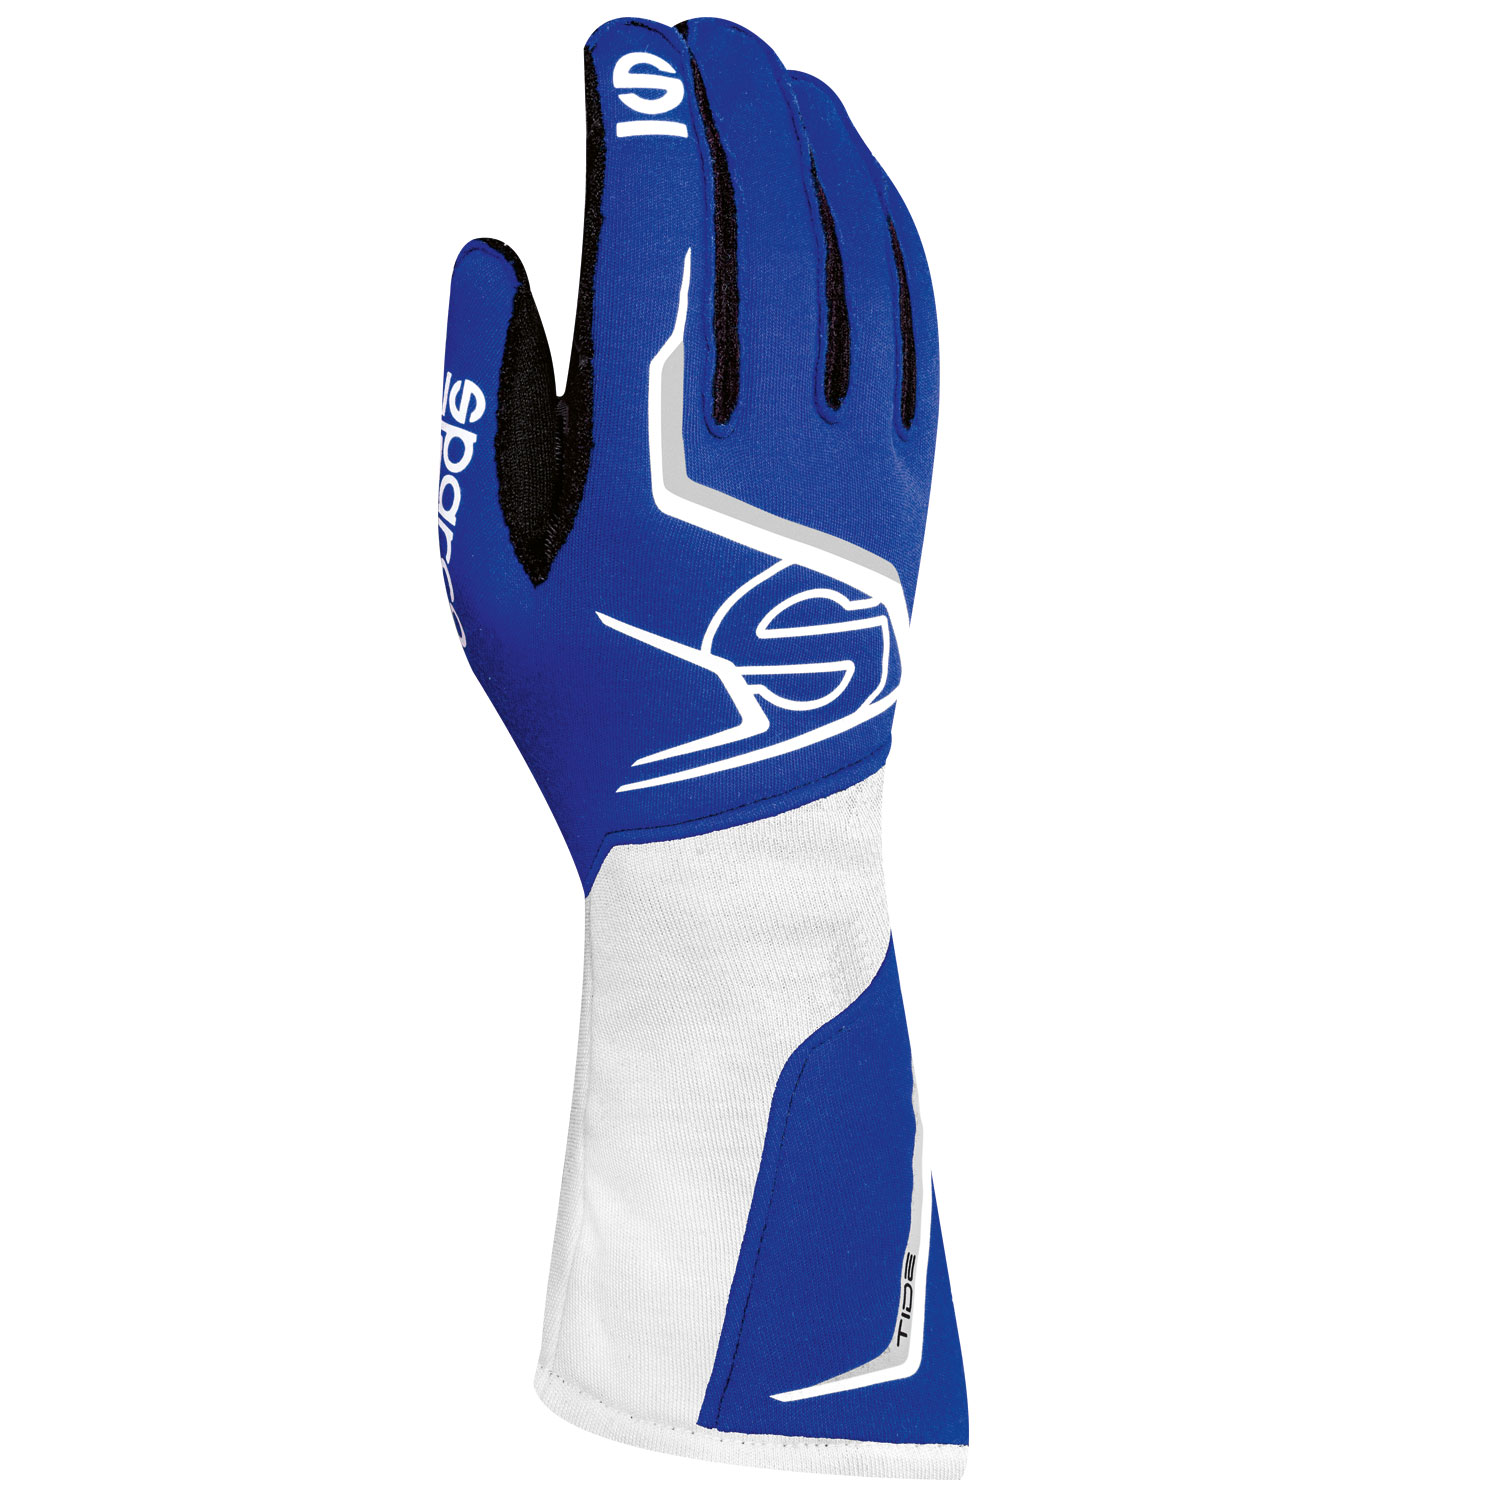 Sparco Handschuh Tide, blau/weiß